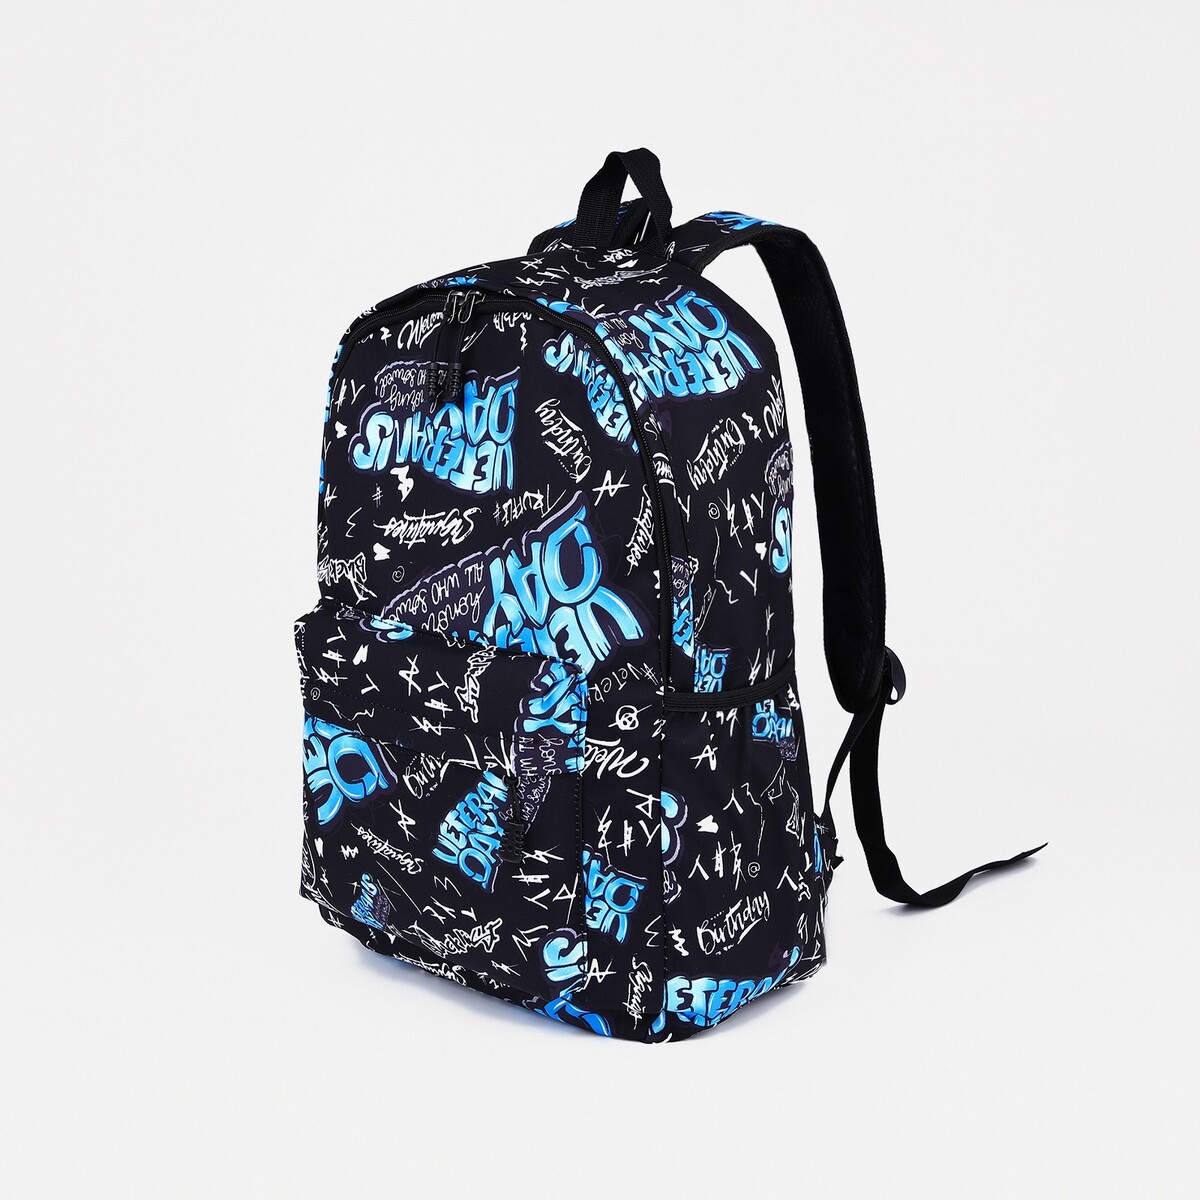 Рюкзак на молнии, 3 наружных кармана, цвет синий/черный рюкзак на молнии голубой